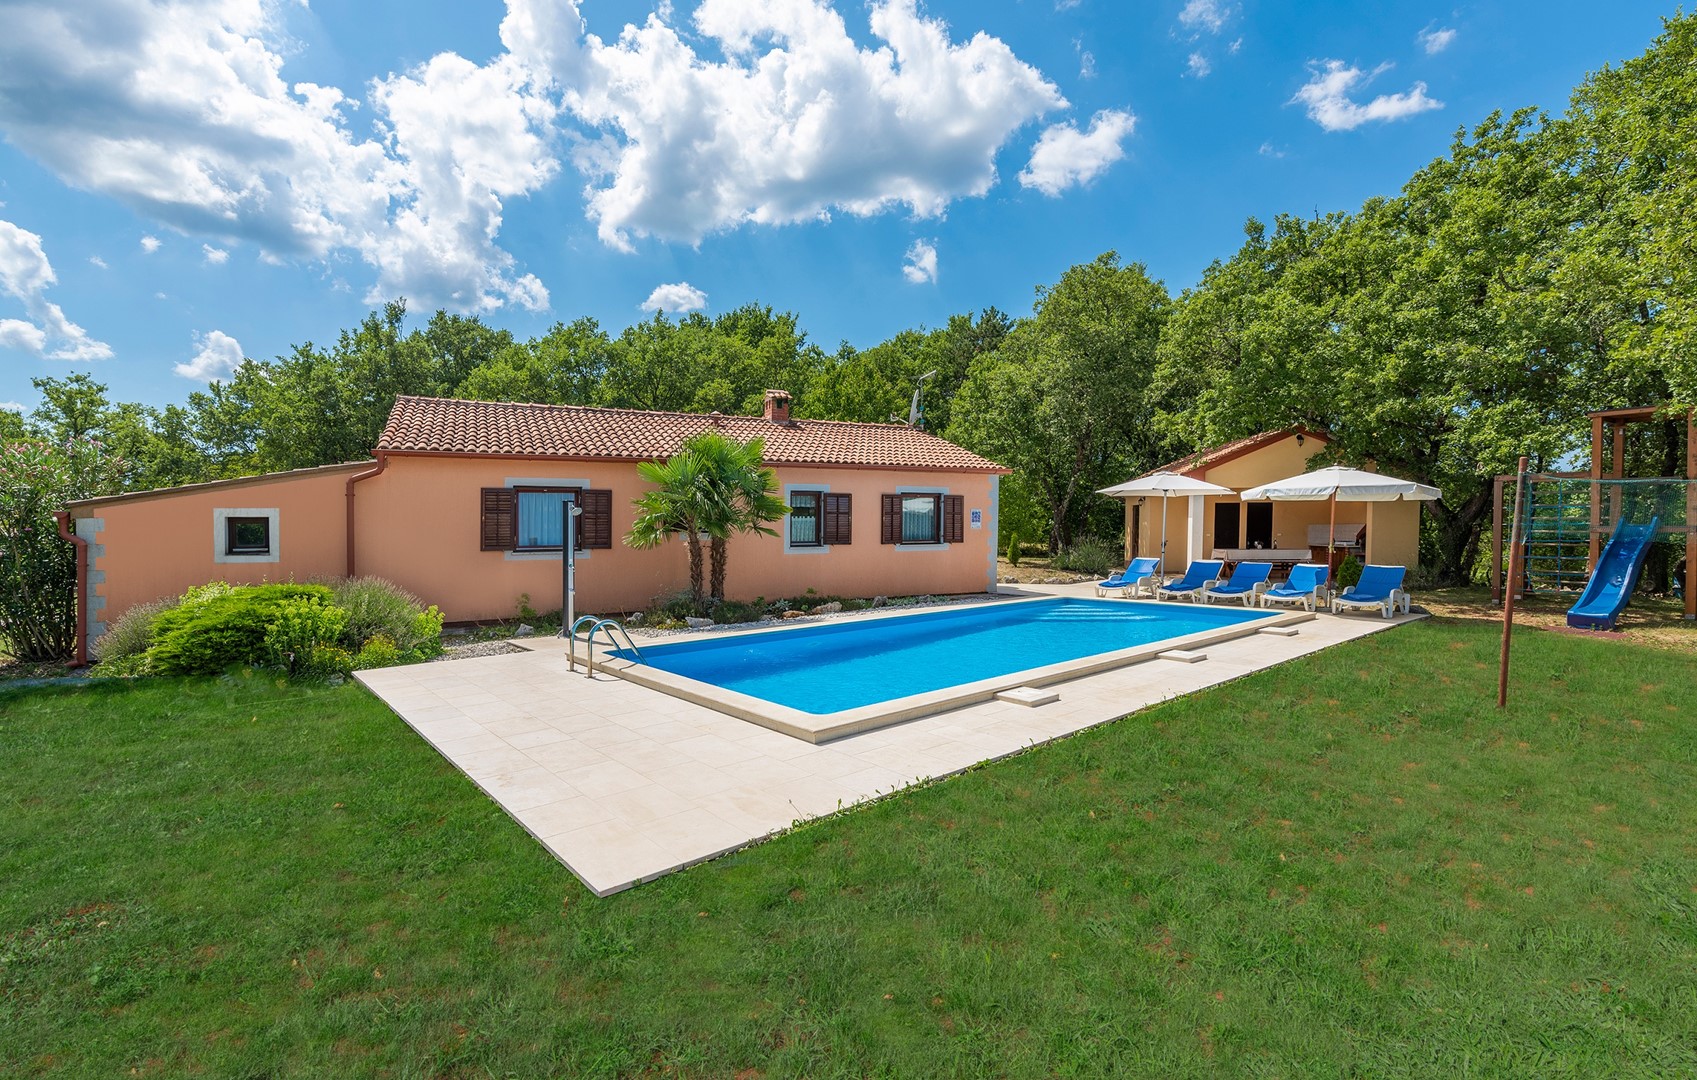 Ferienhaus Fragola mit Pool  in Kroatien